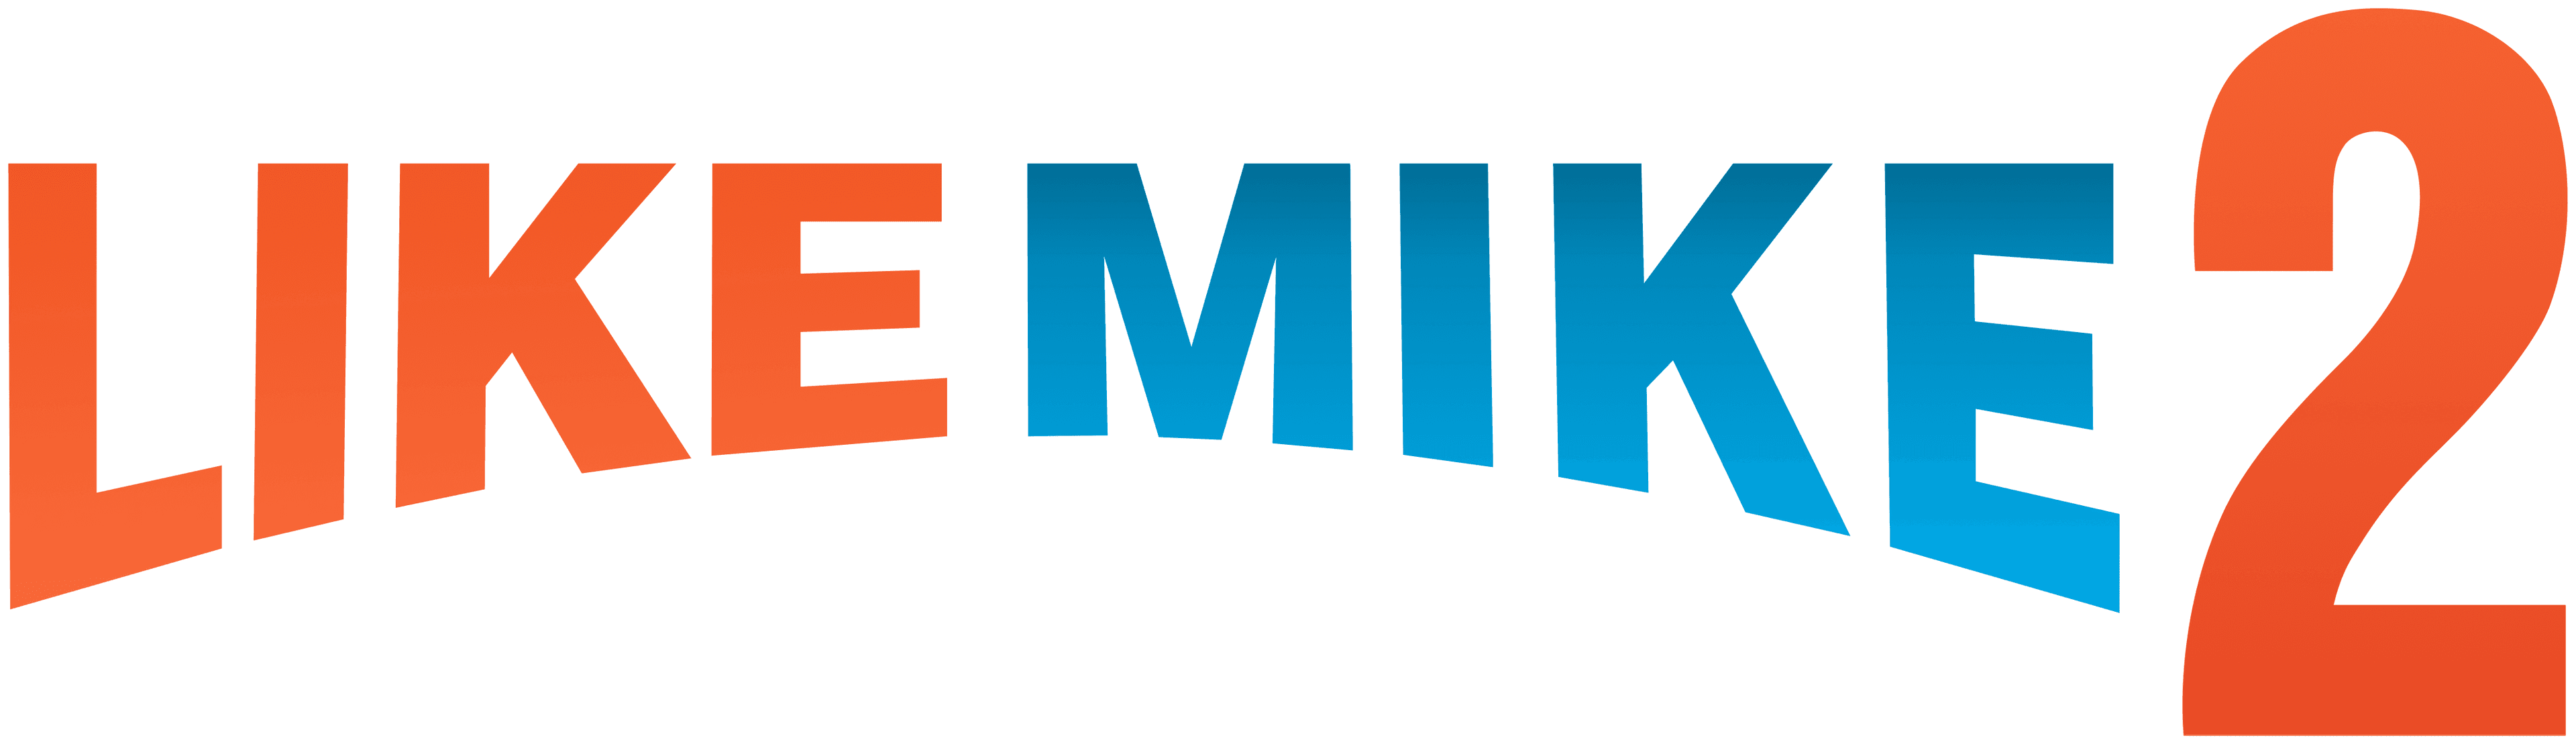 Like Mike 2: Streetball logo